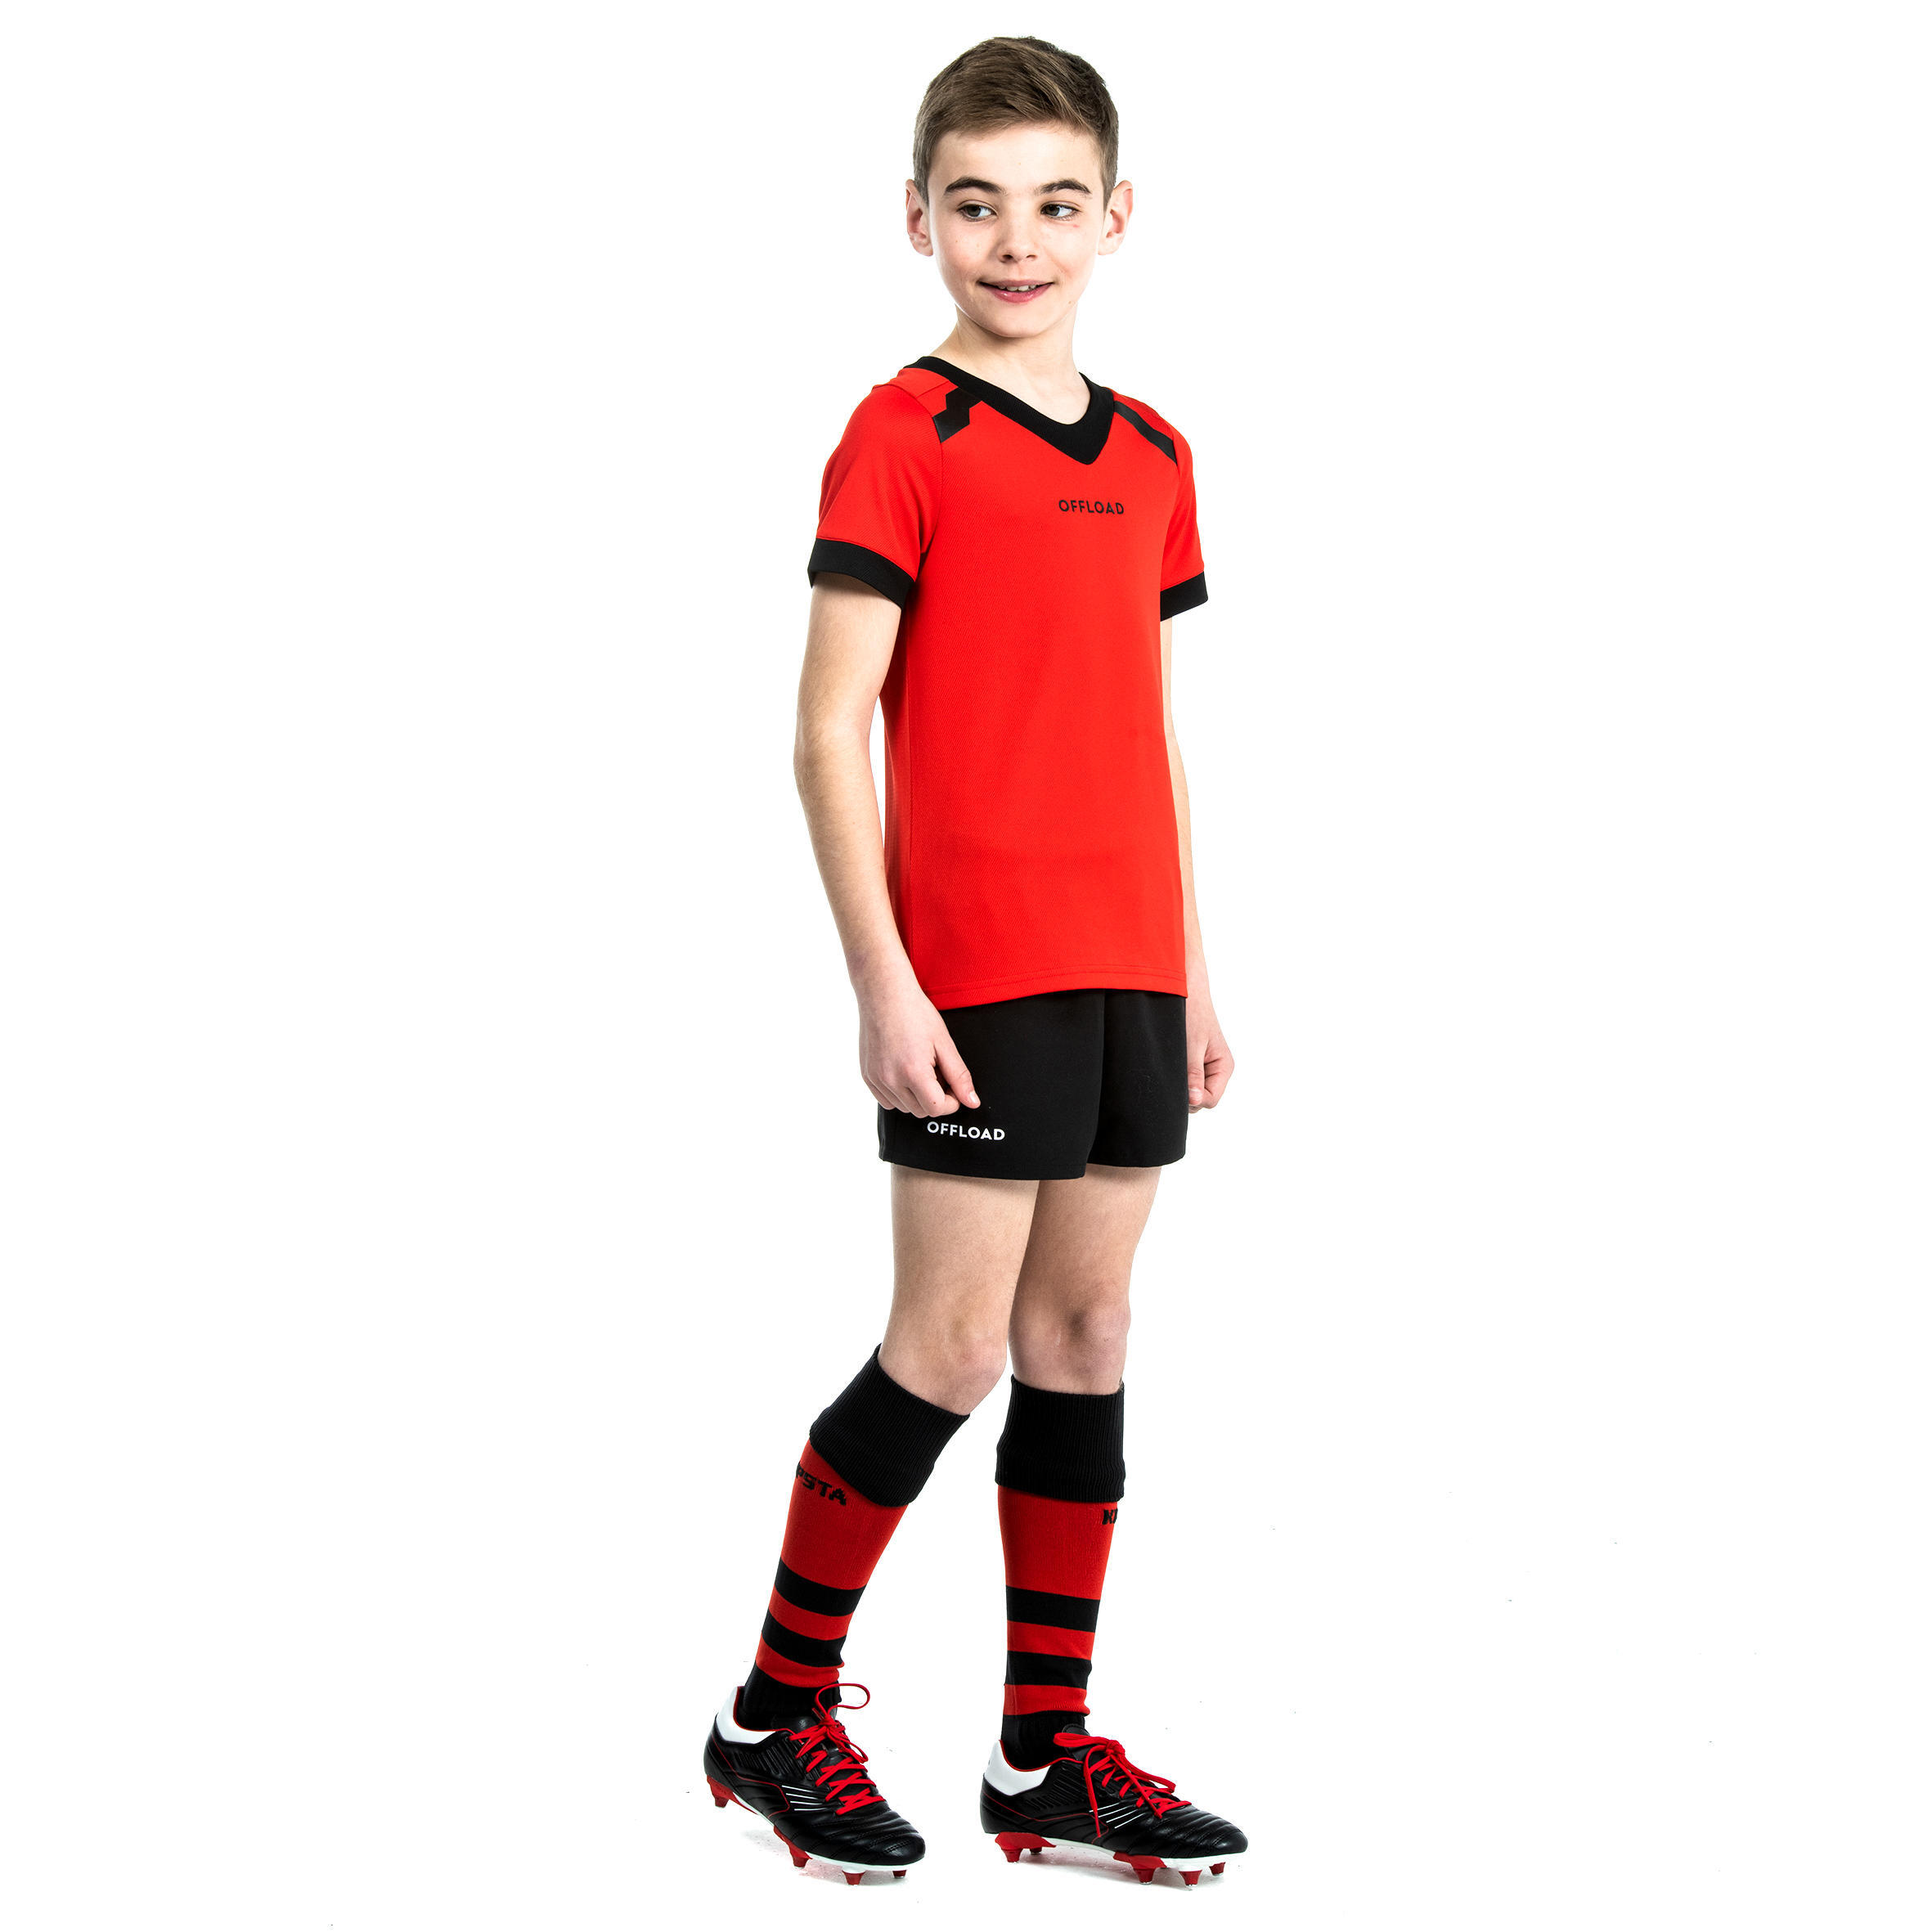 R100 Junior Rugby Club Pocketless Shorts - Black 5/6